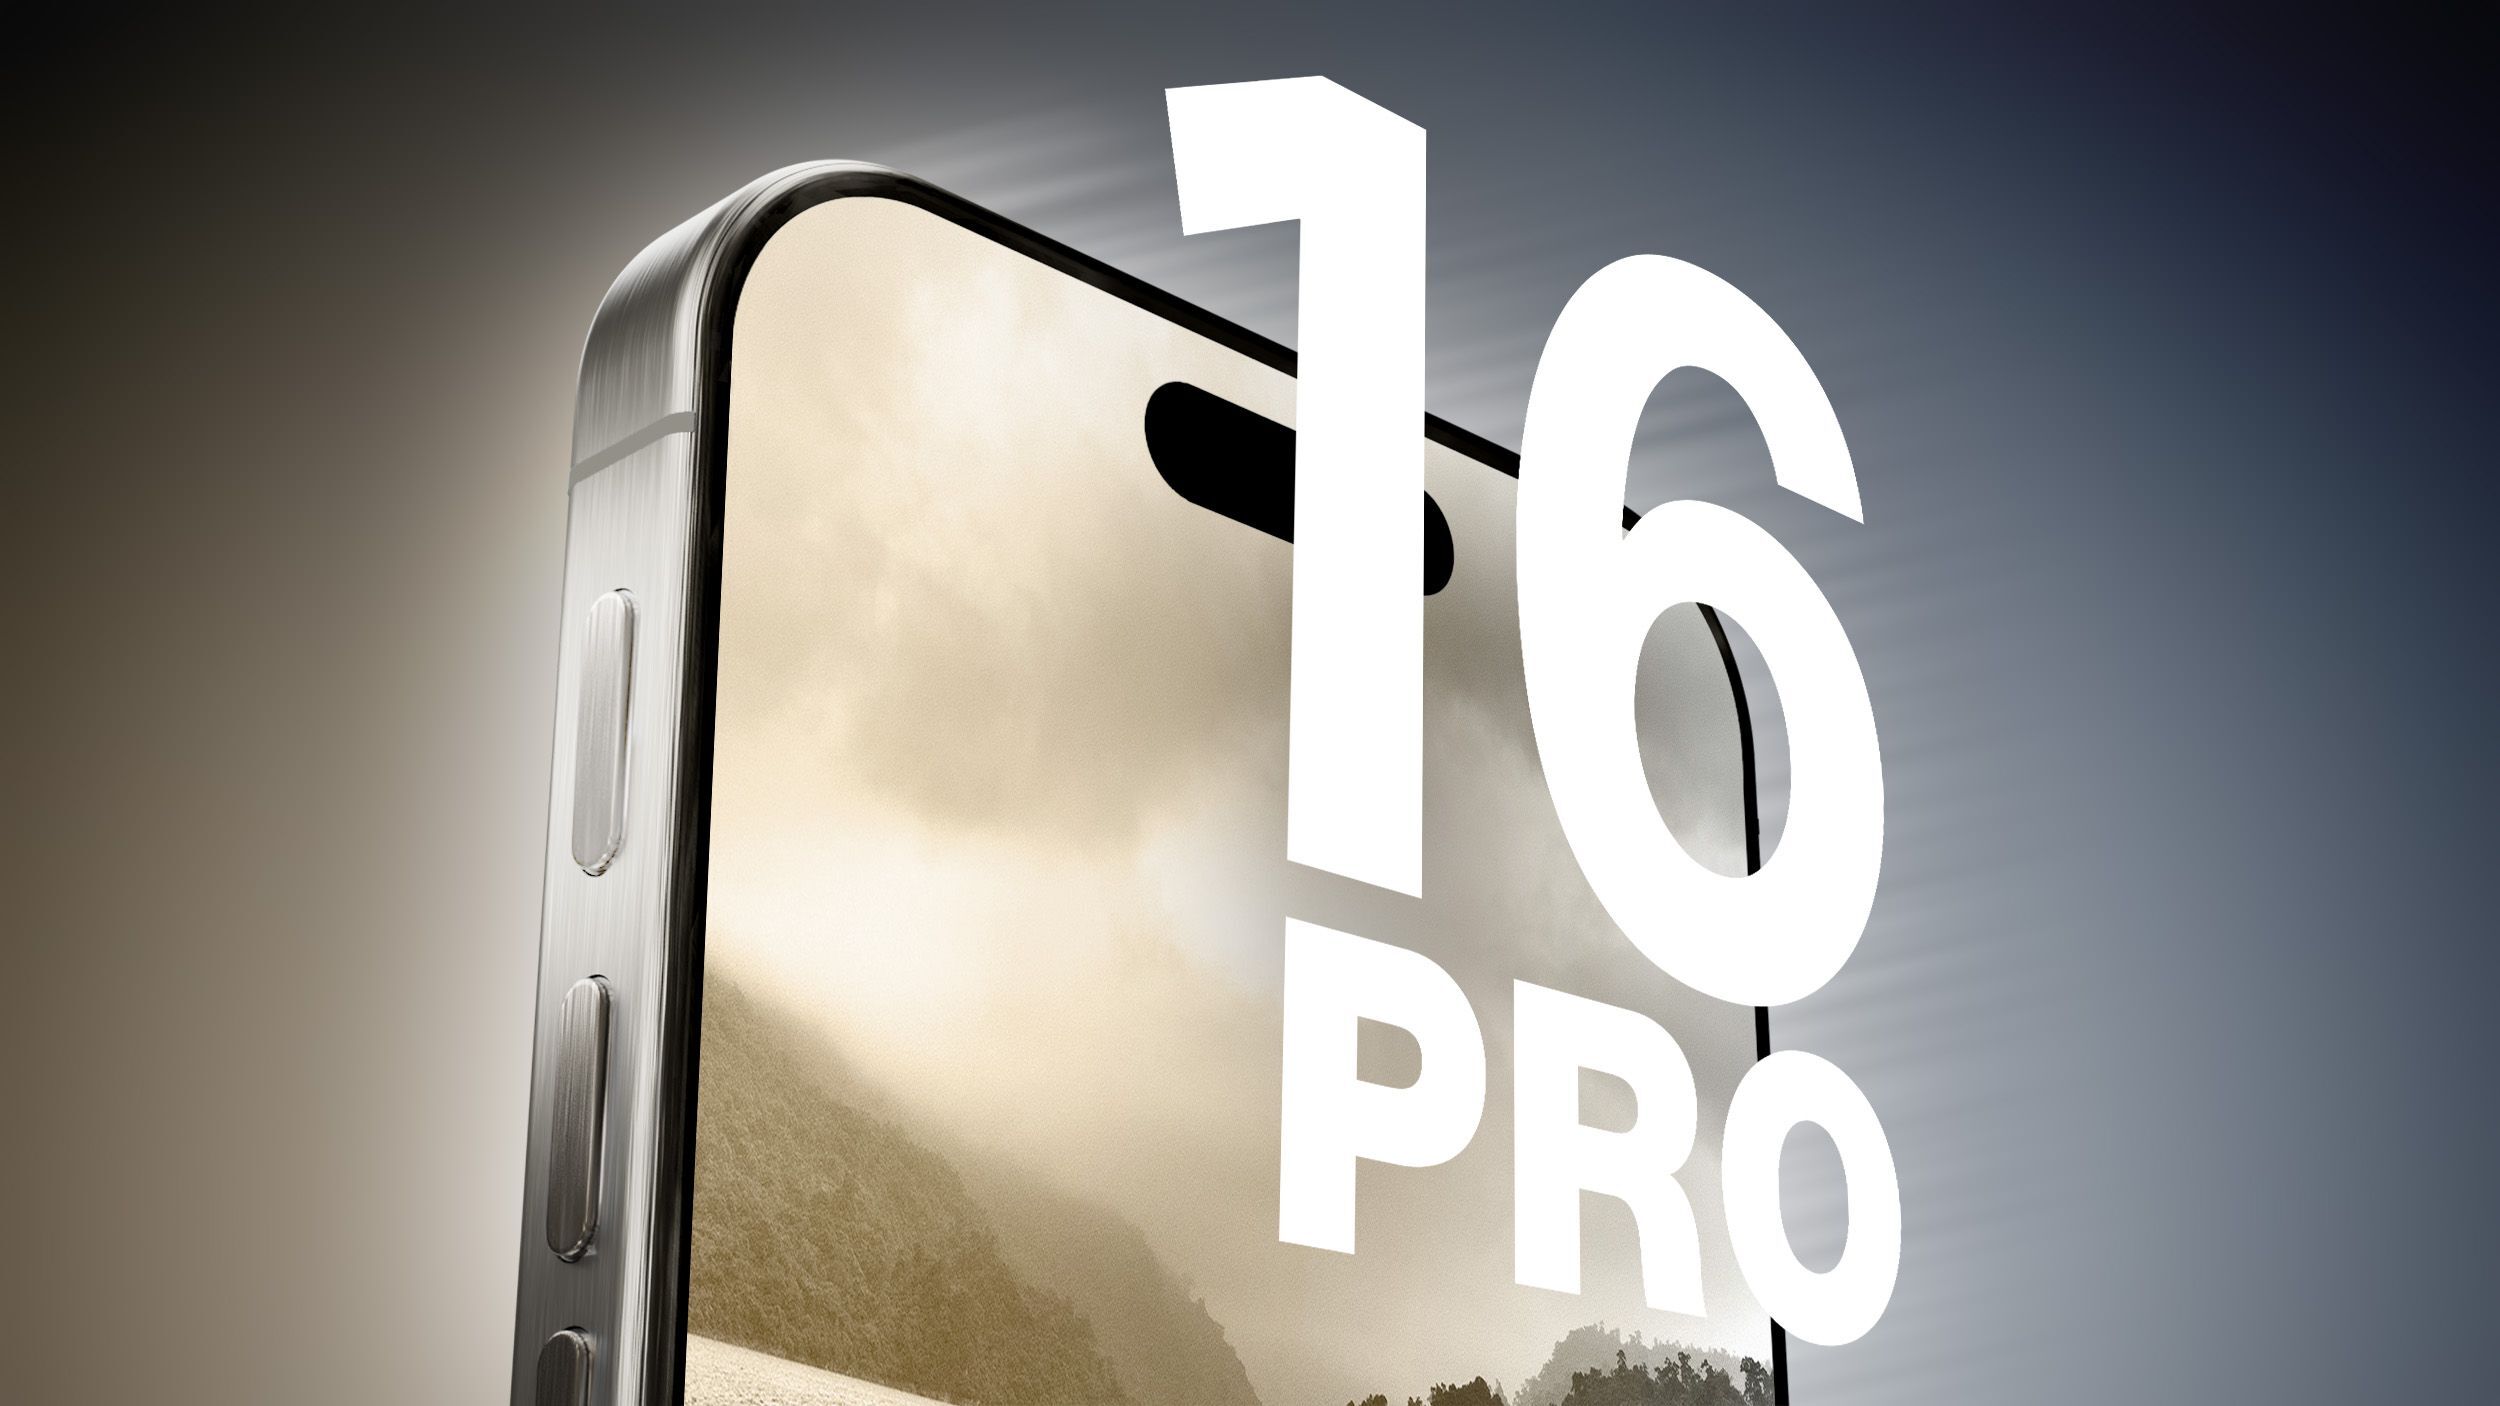    iphone pro     